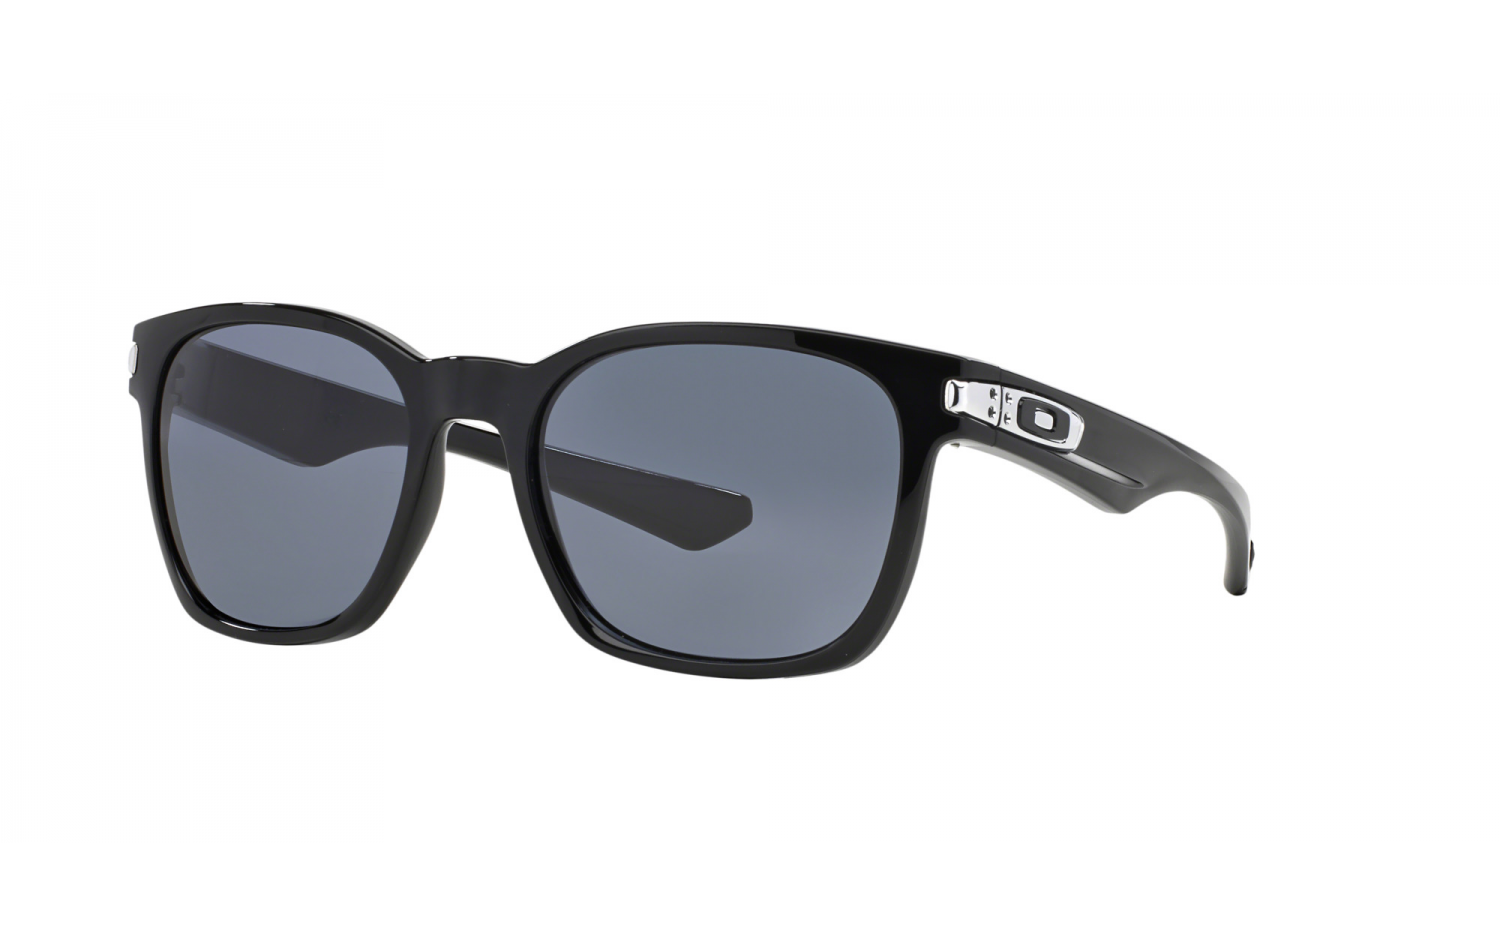 Oakley Garage Rock Sunglasses Evo | vlr.eng.br